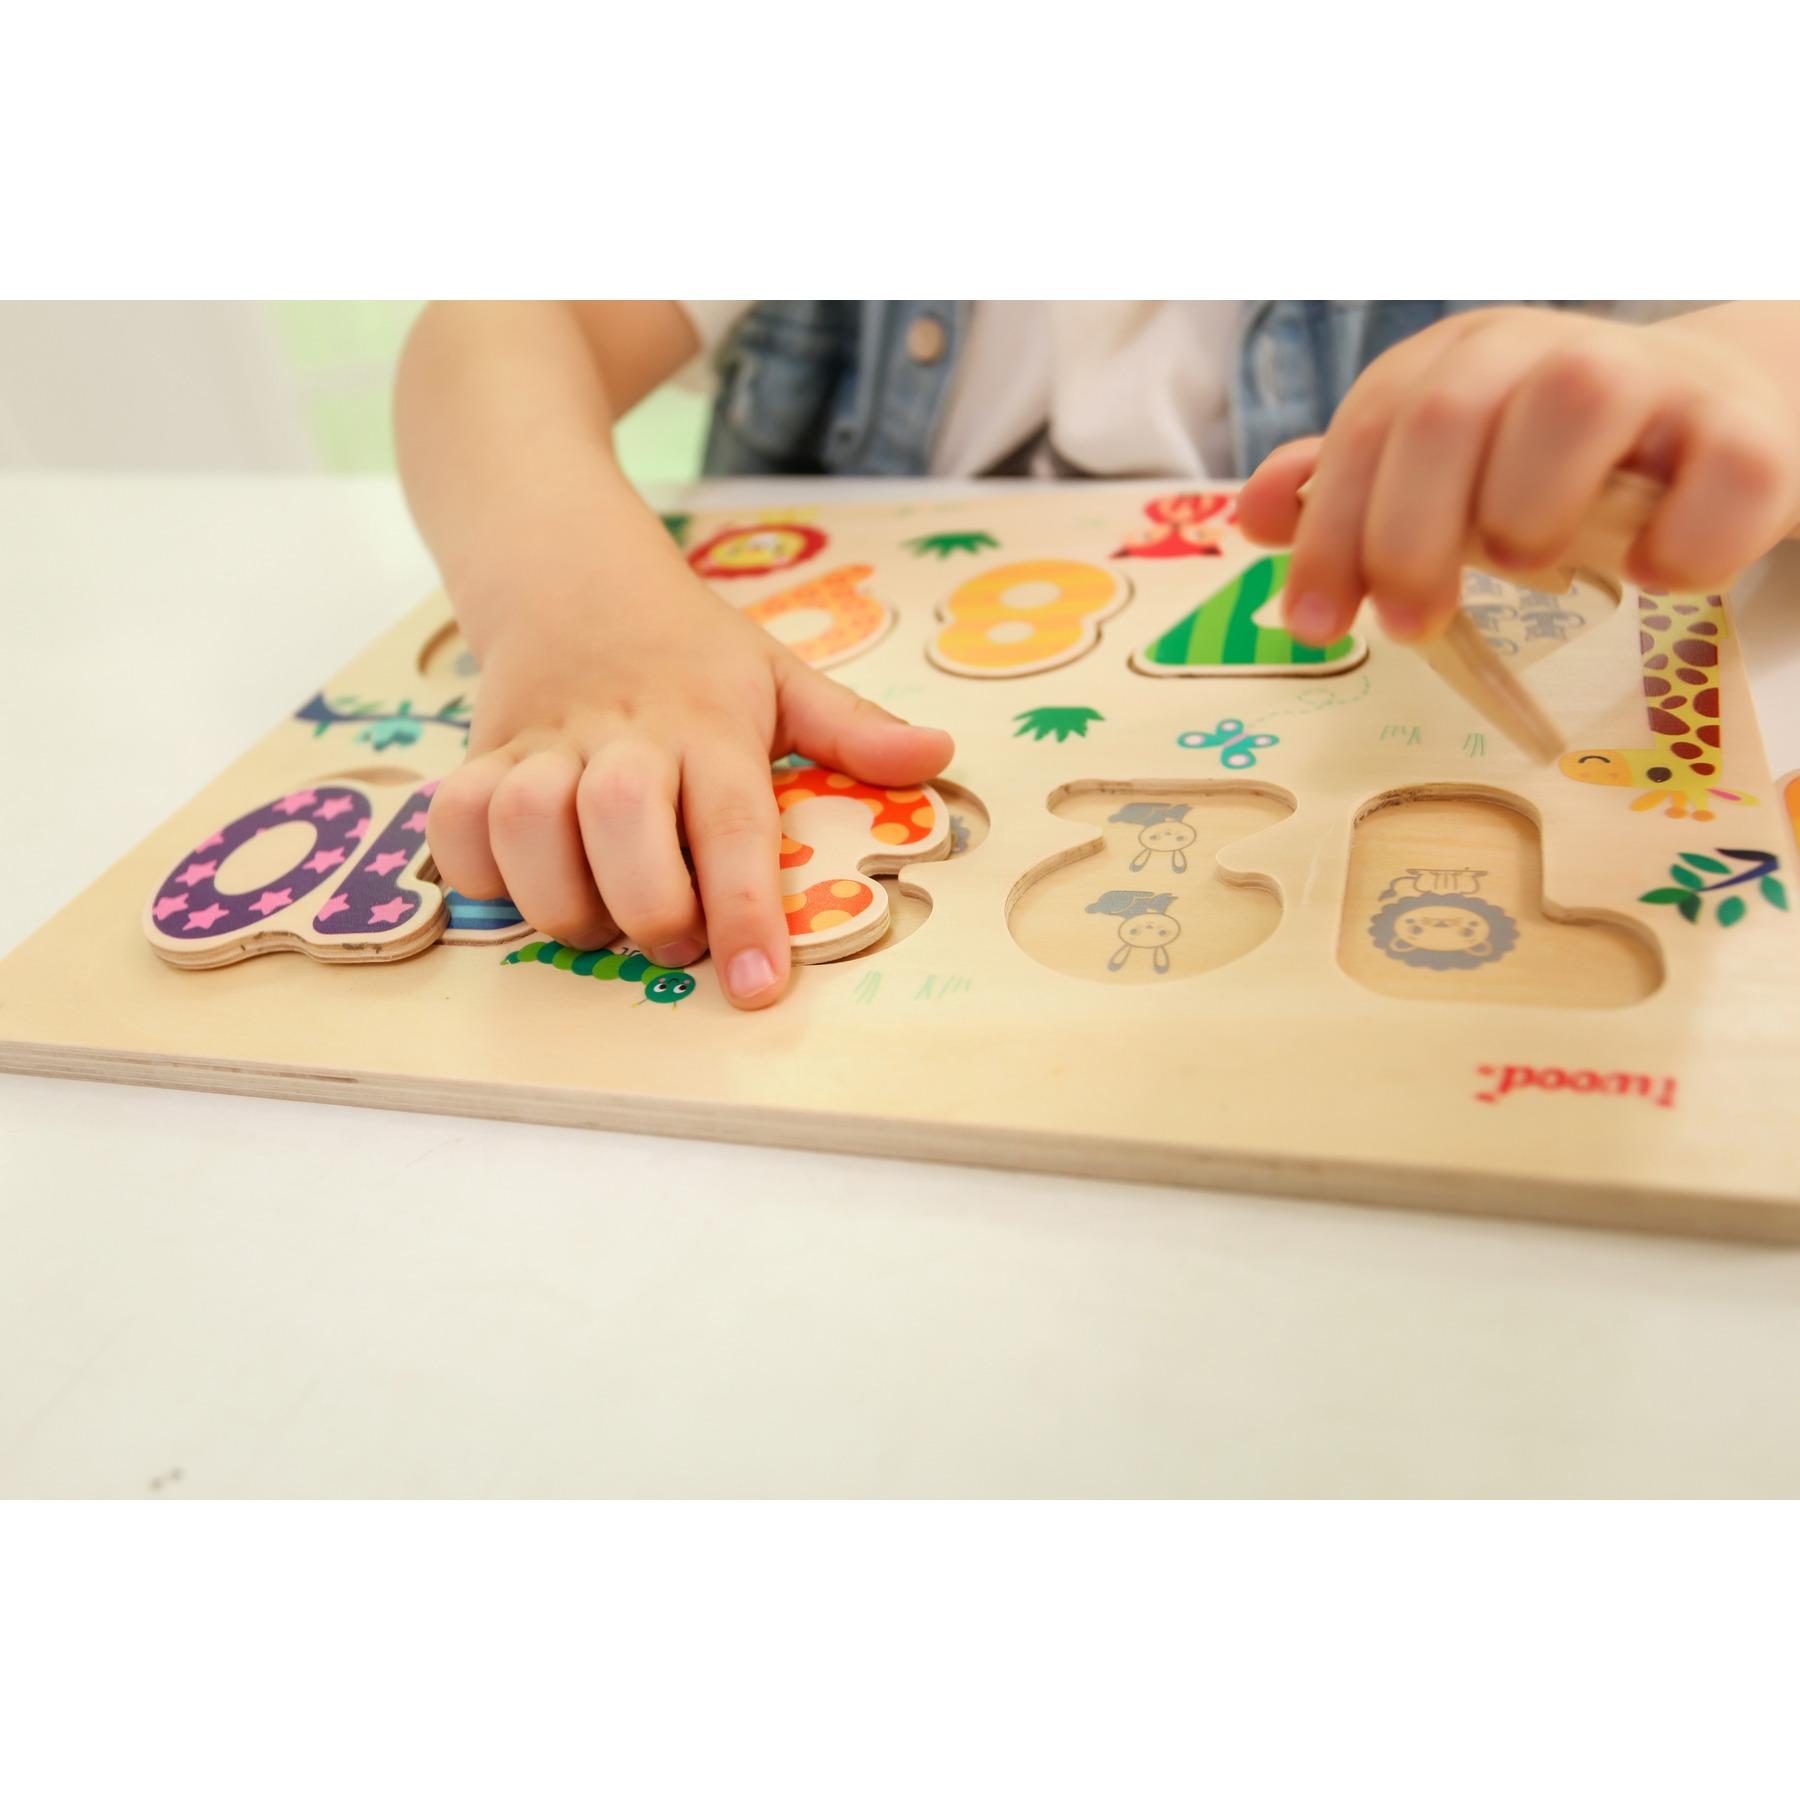 Изображение товара: Iwood-деревянный пазл с цифрами (обучающая игра для детей и младенцев, Монтессори, пазл с 3D цифрами, цвета пазлов)